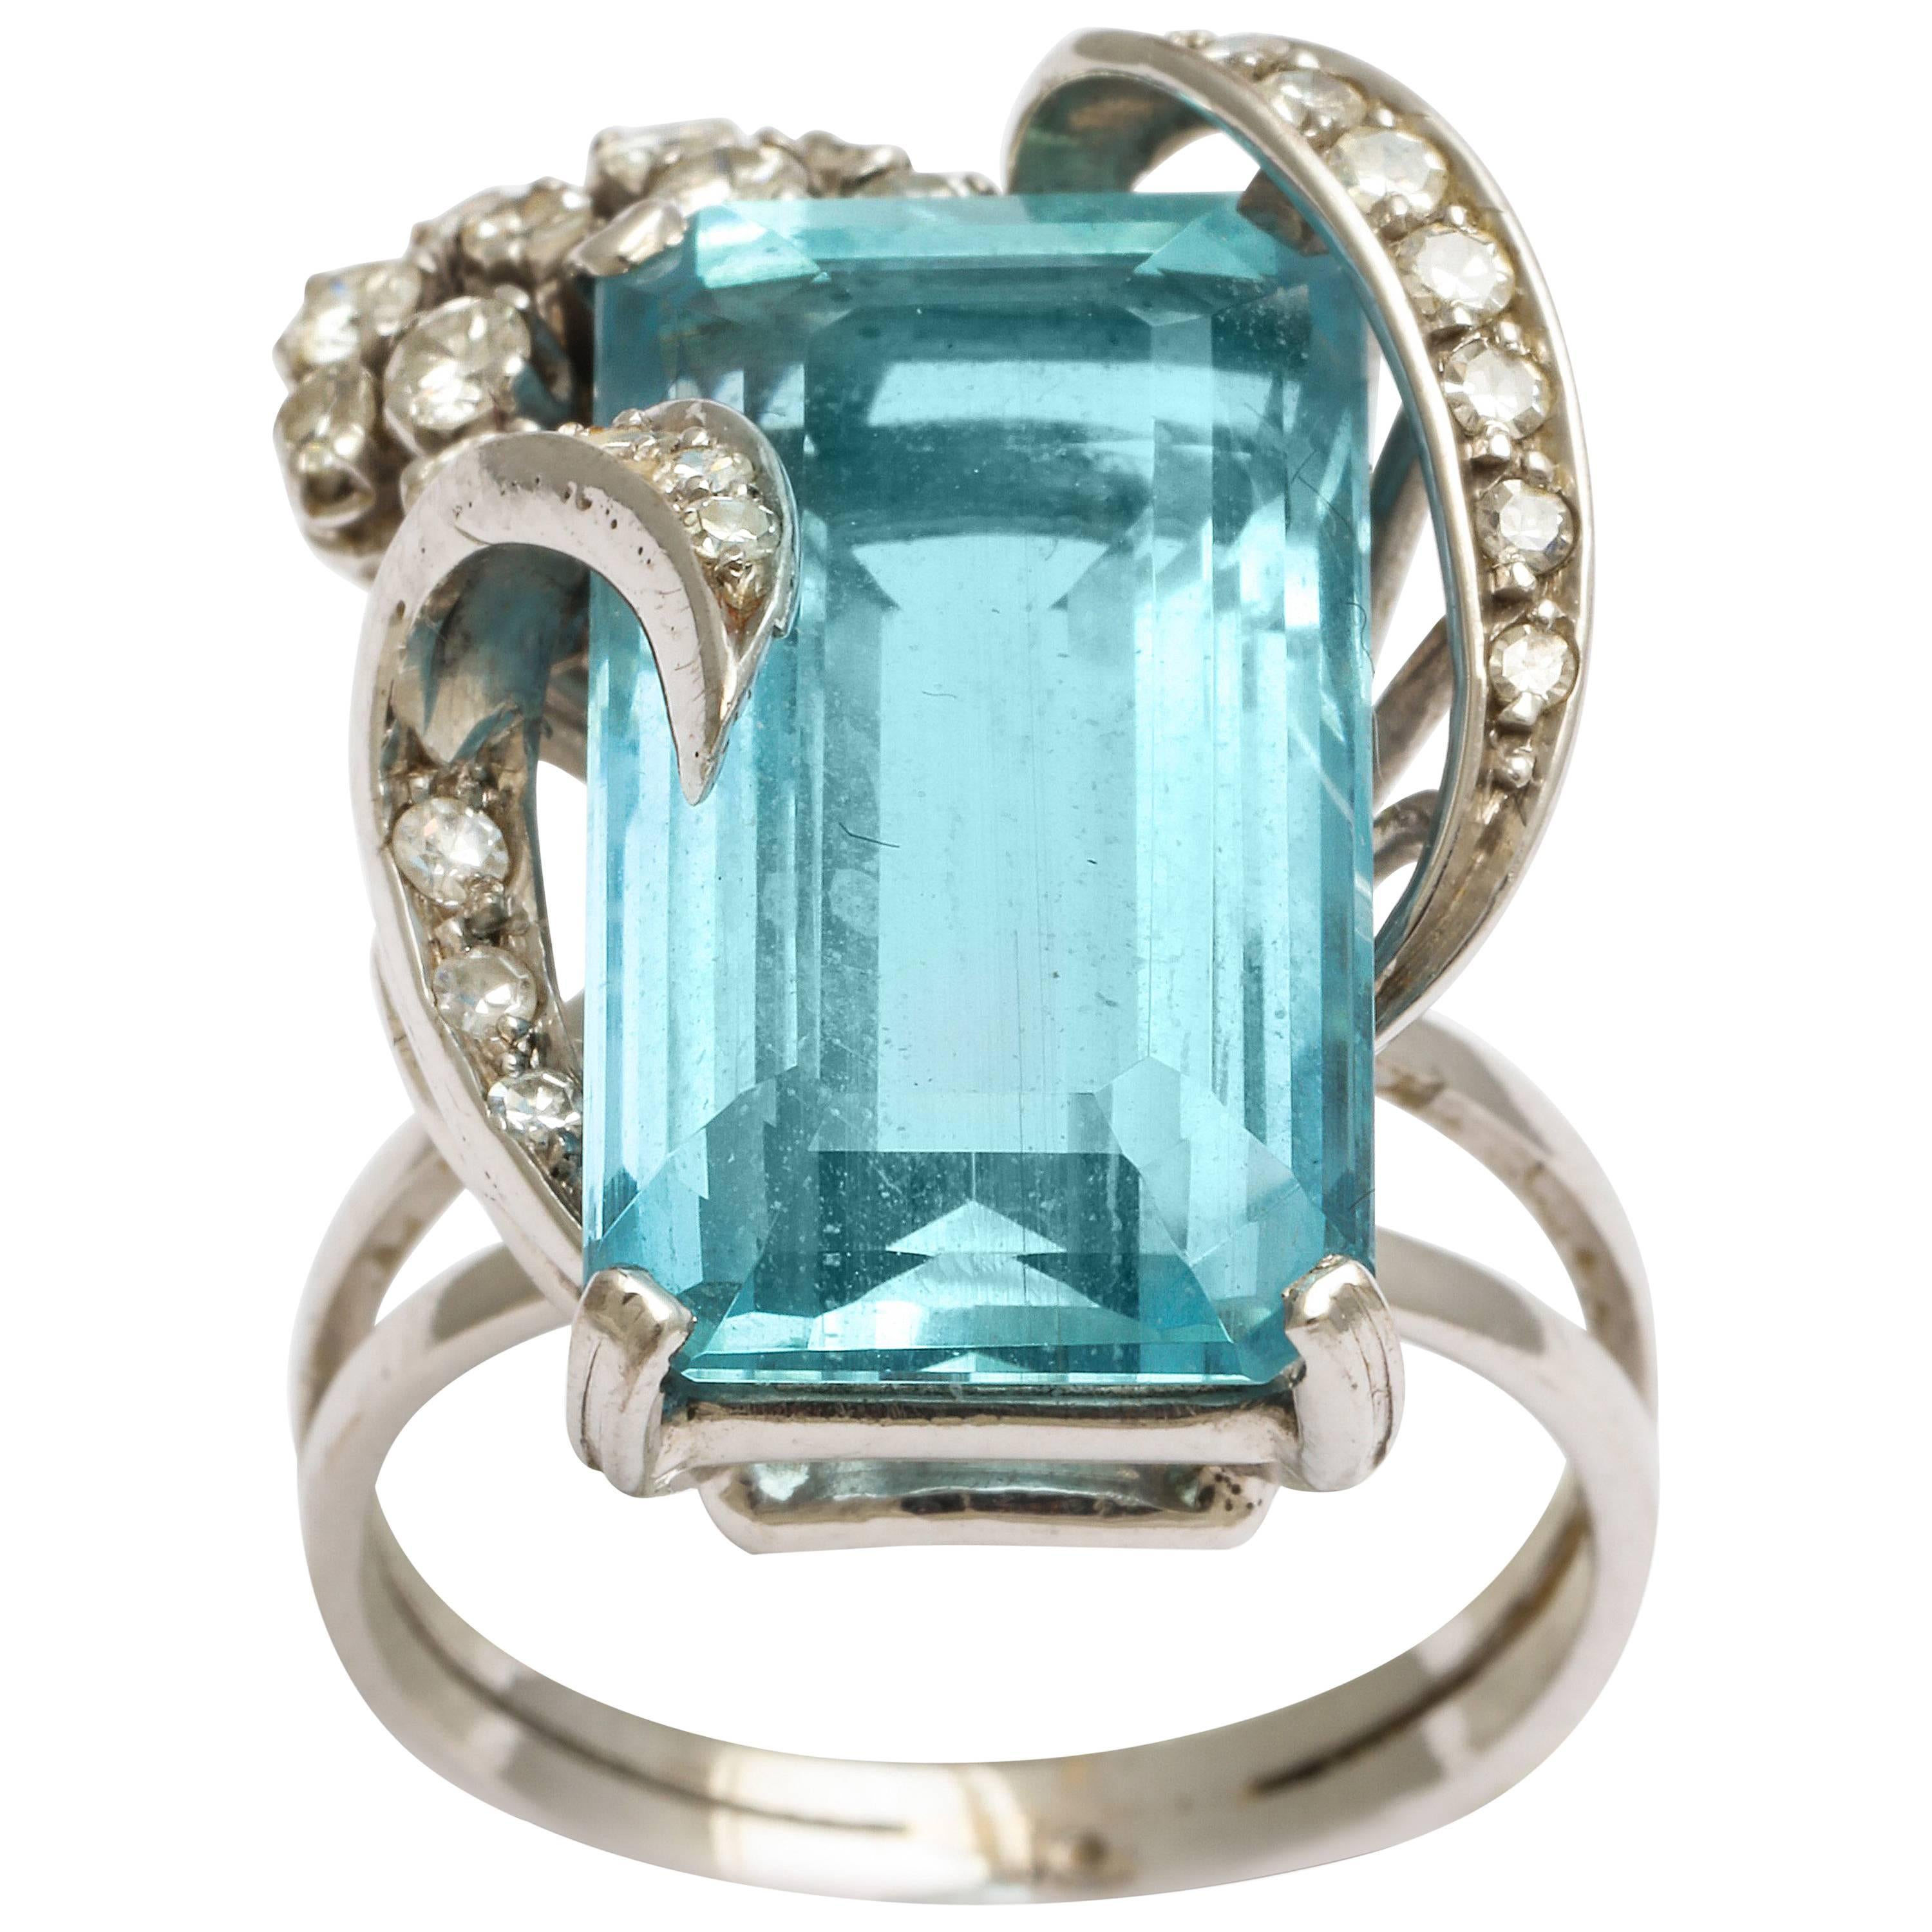 H. Stern Emerald Cut Aquamarine with Diamonds on a Platinum Ring